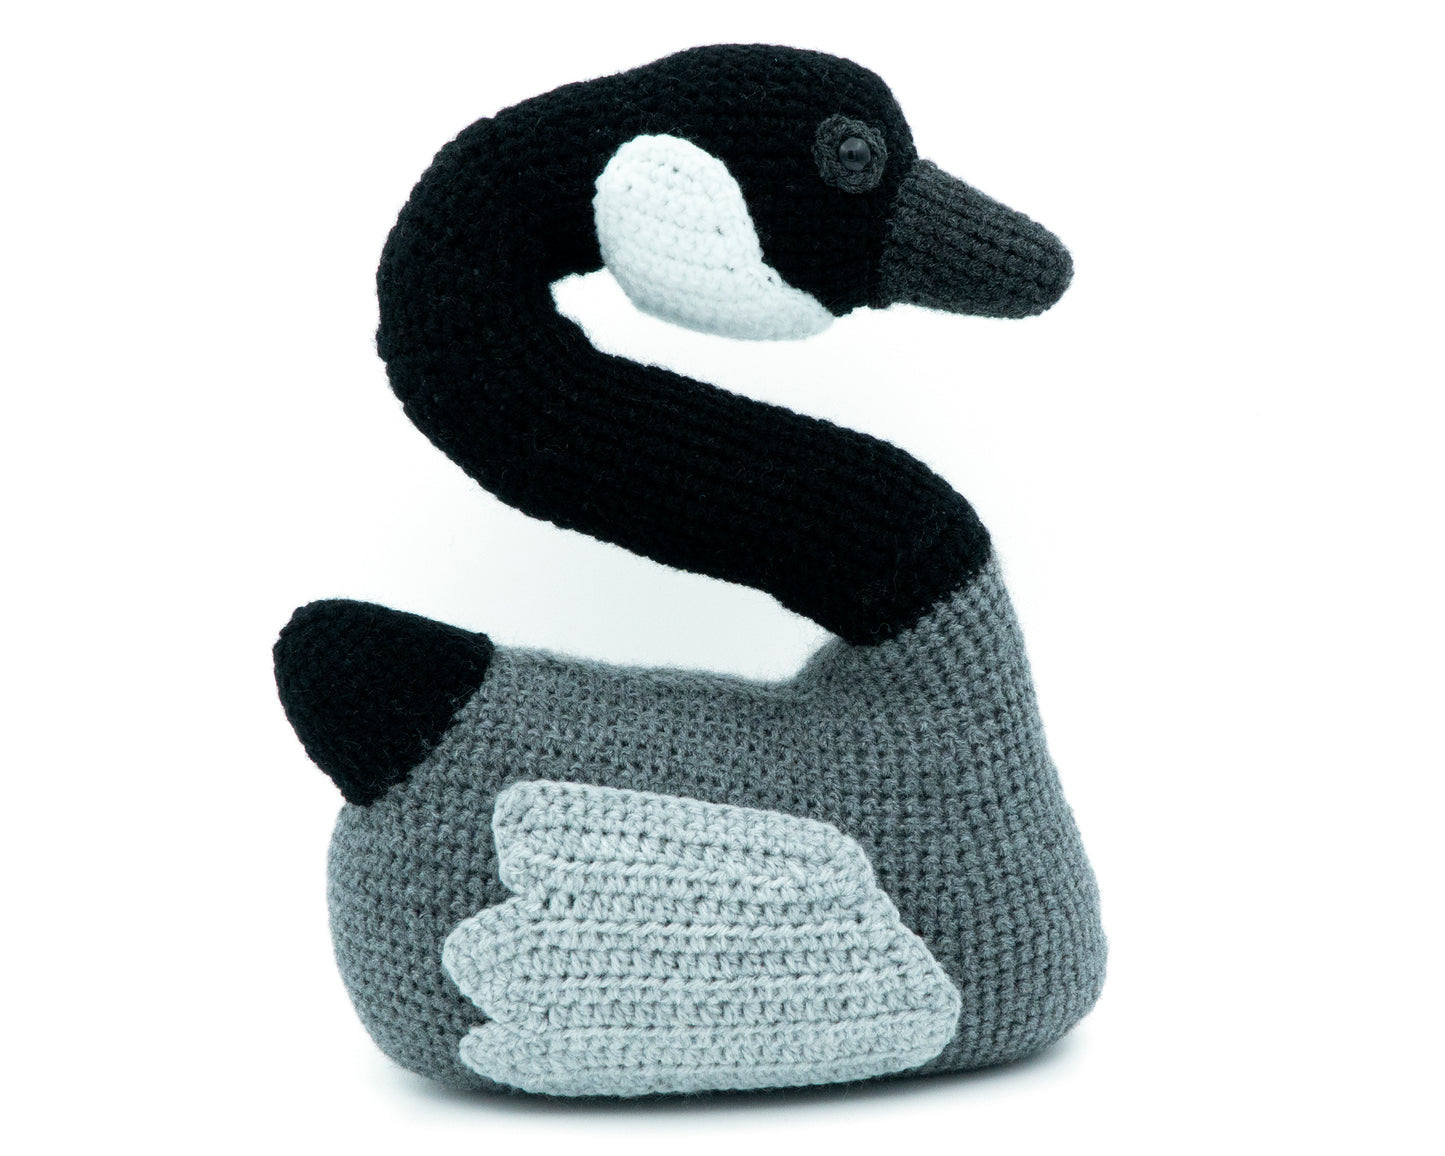 amigurumi crochet canada goose pattern side view